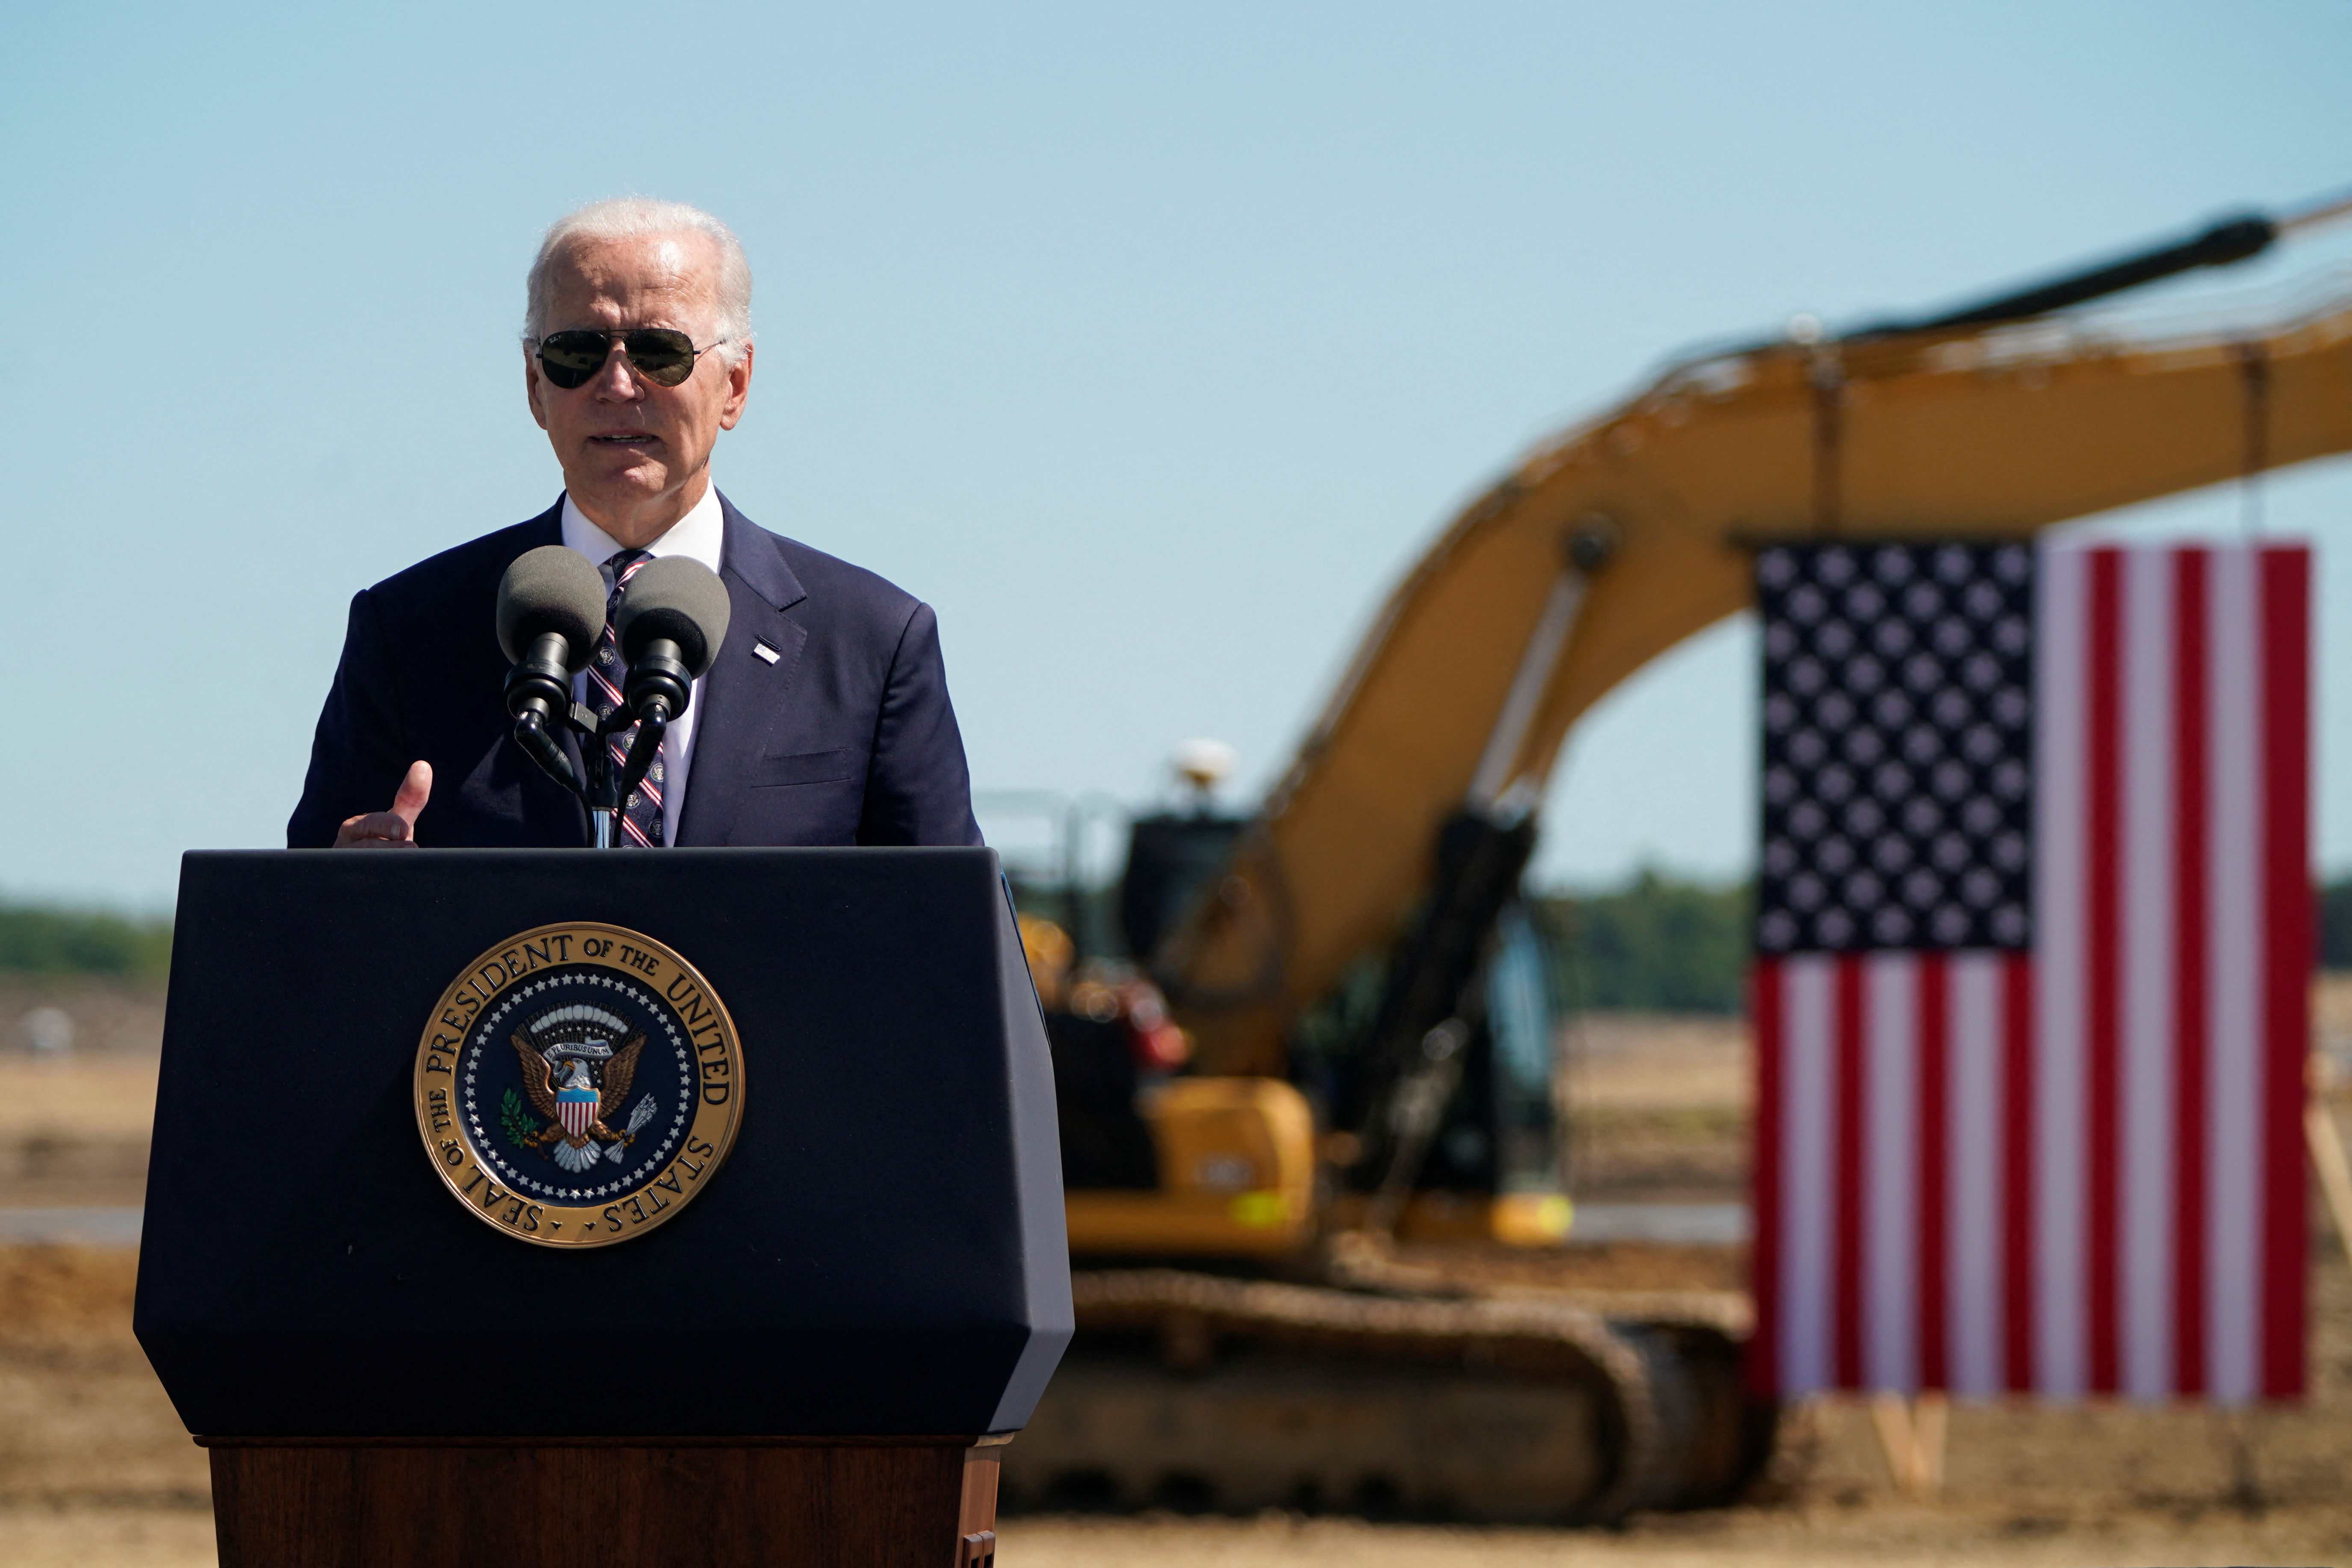 U.S. President Joe Biden travels to Ohio